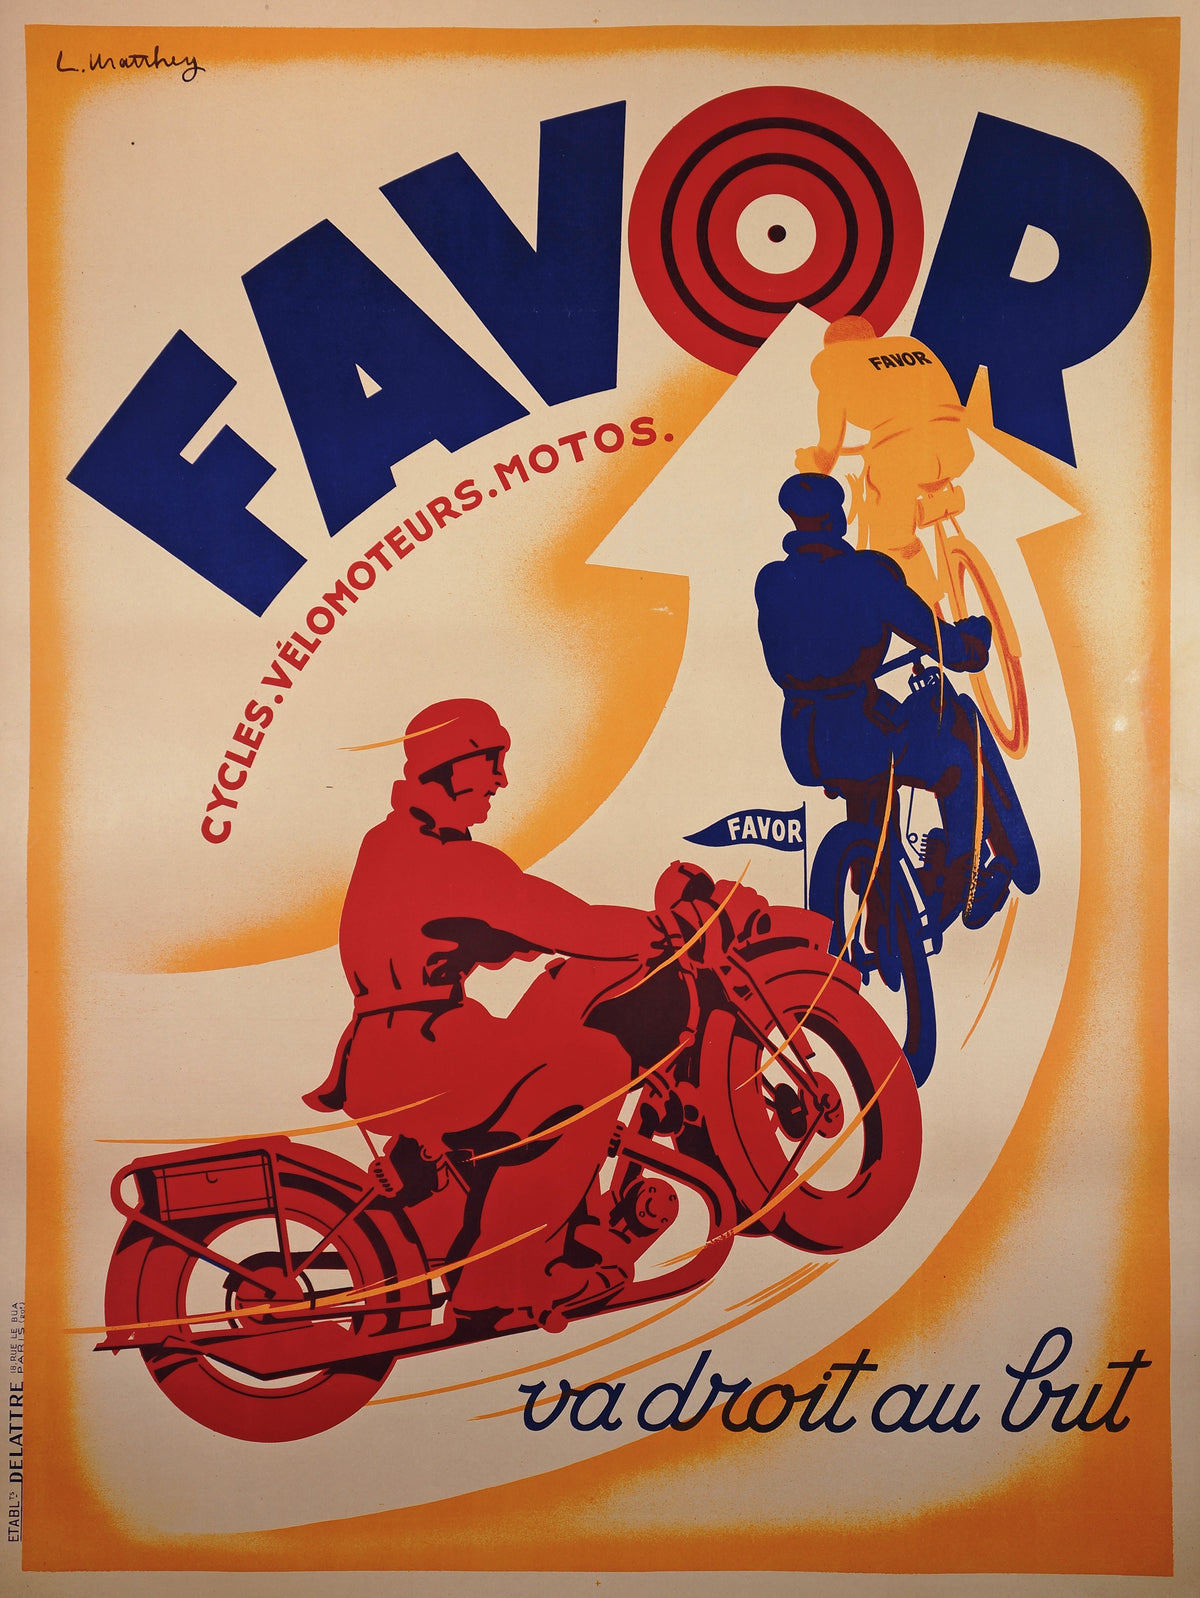 Favor Bullseye - Authentic Vintage Poster